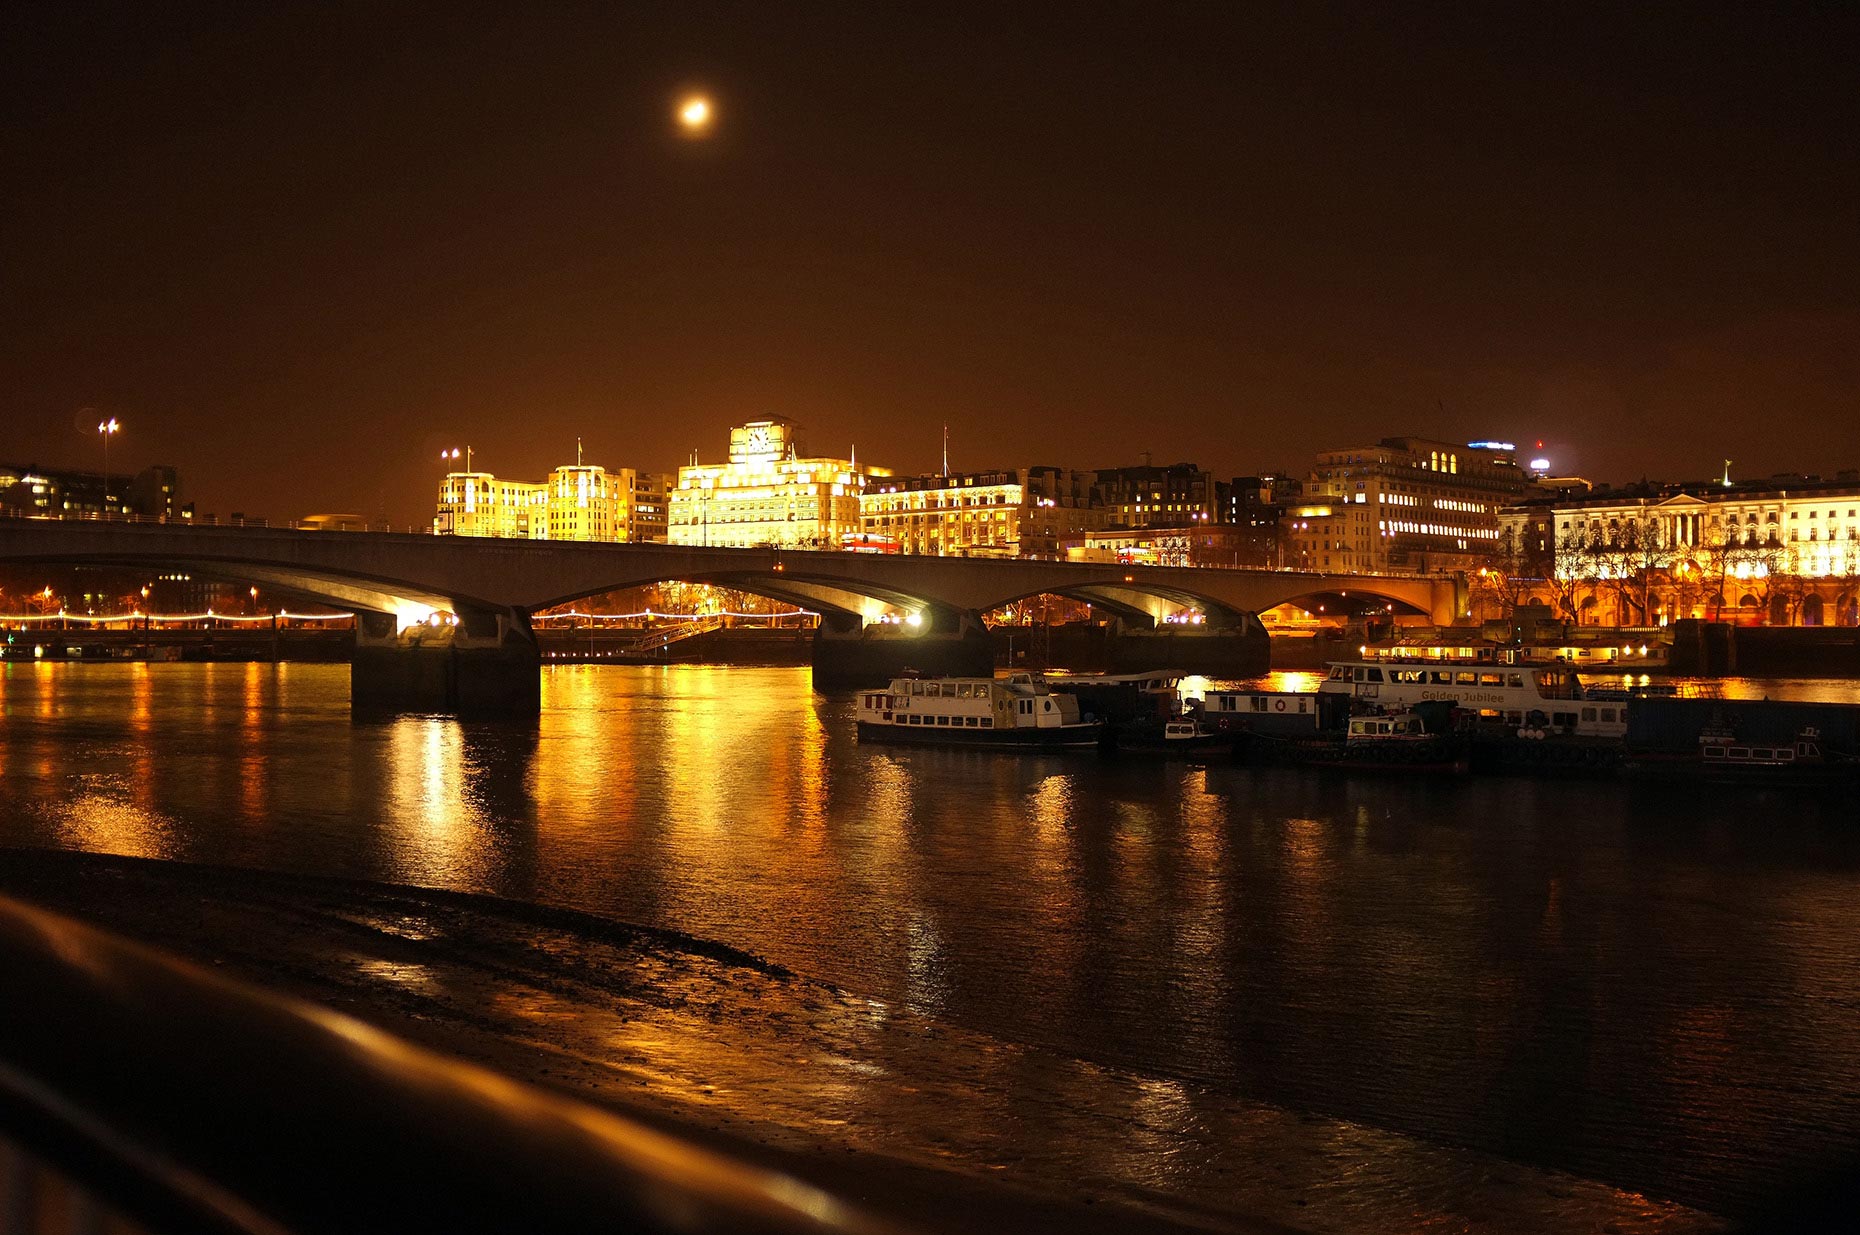 Cities at Night - London